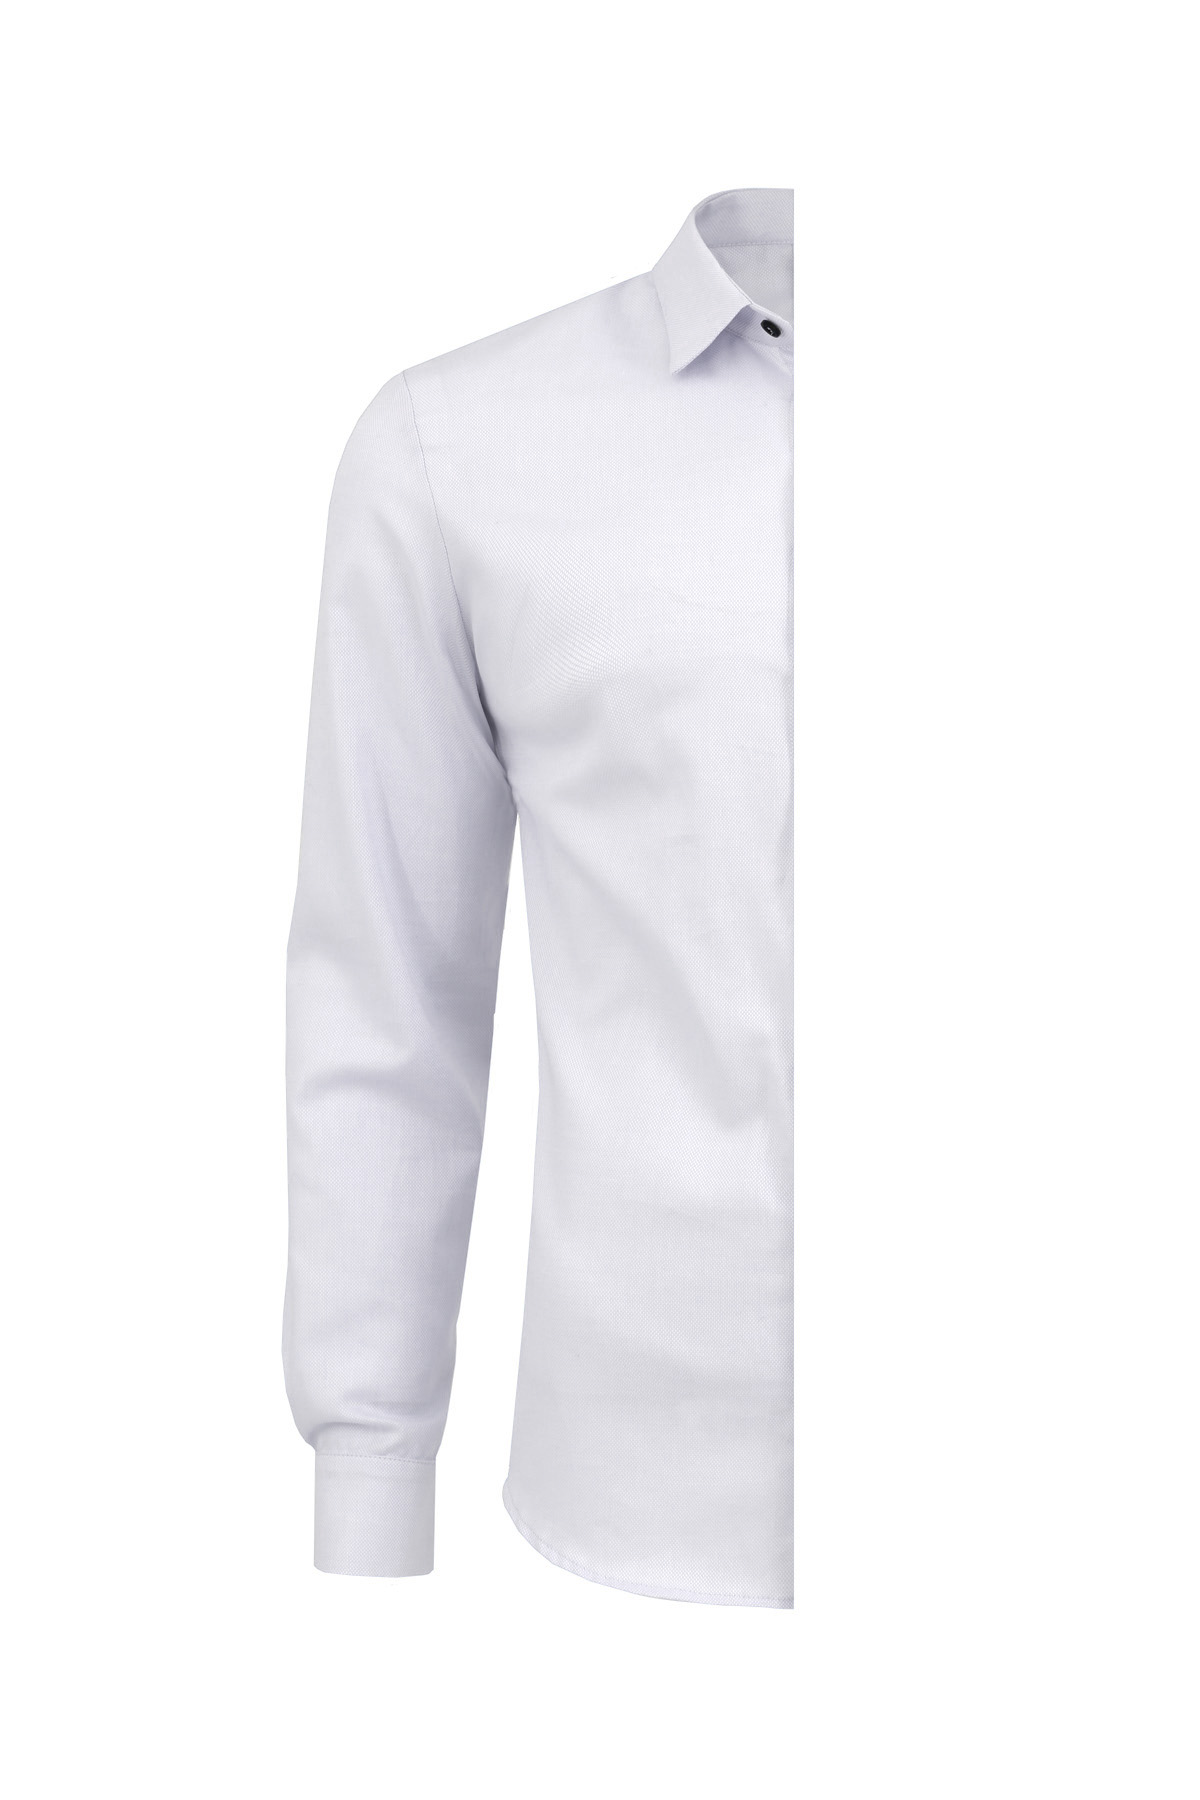 white slim fit shirt - right